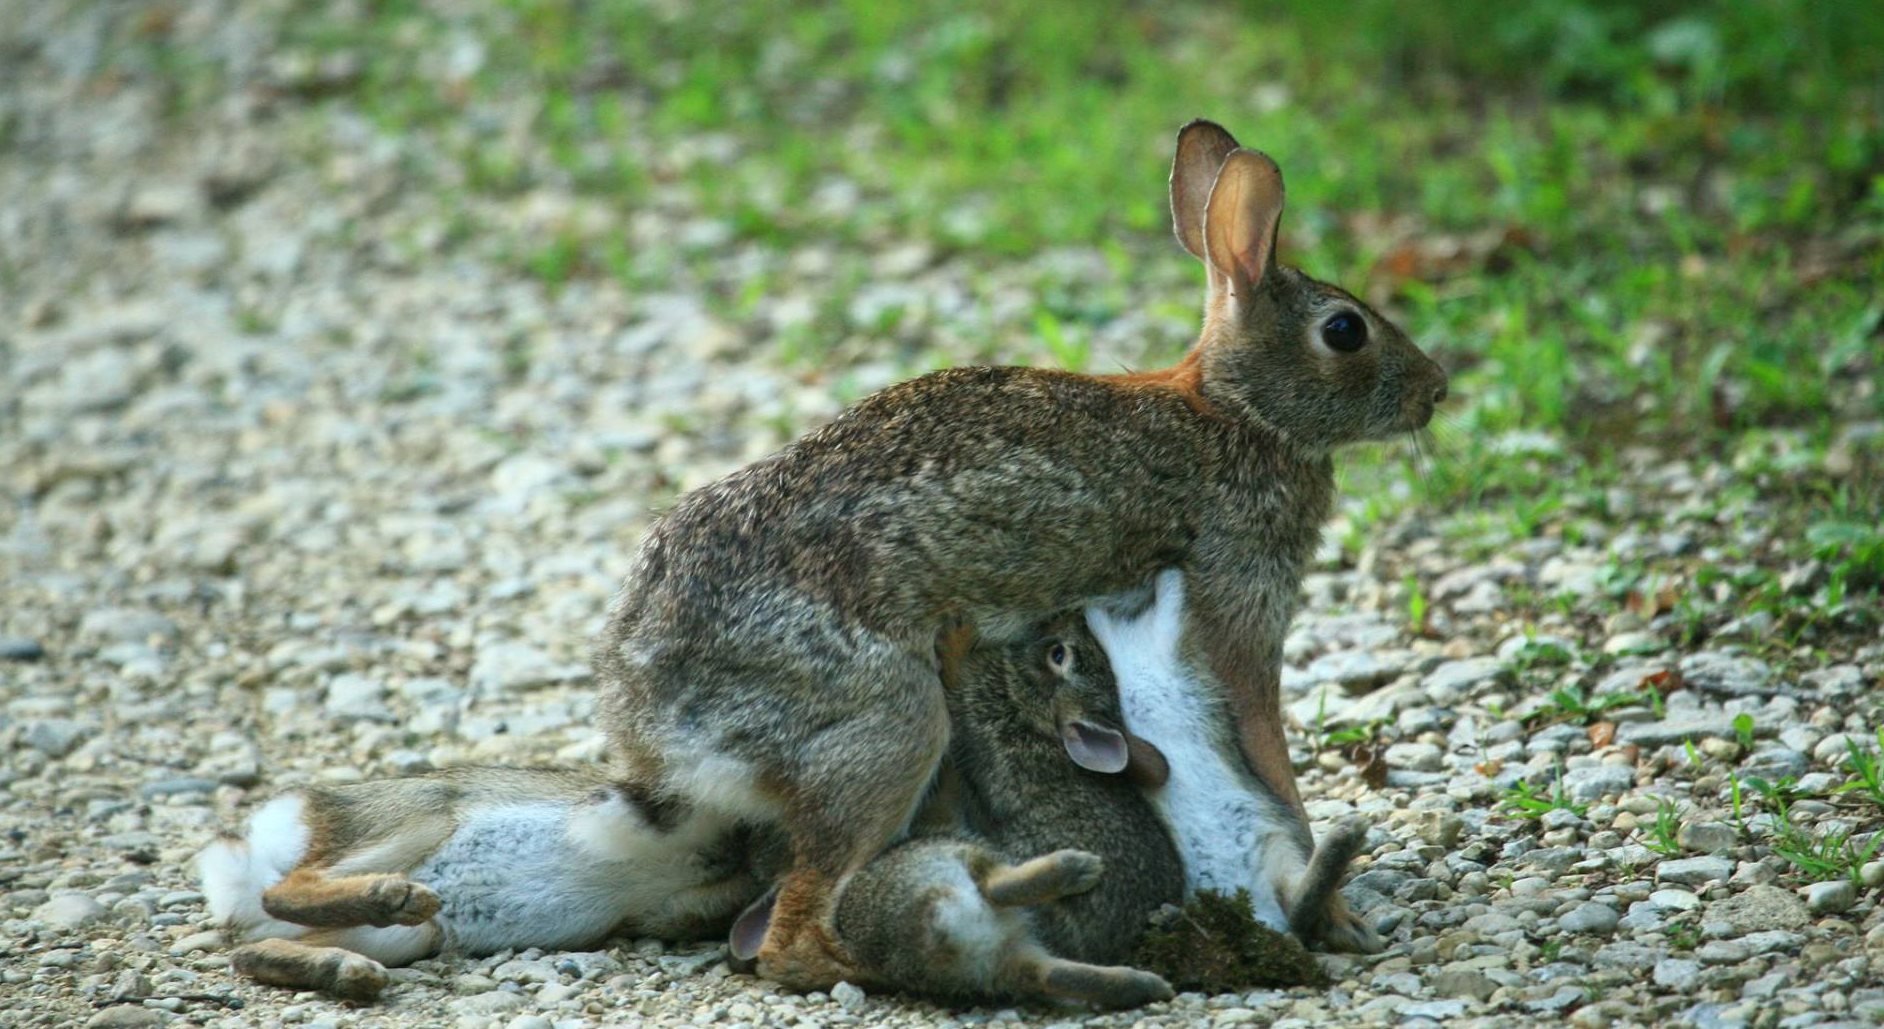 A rabbit nursing her babies.